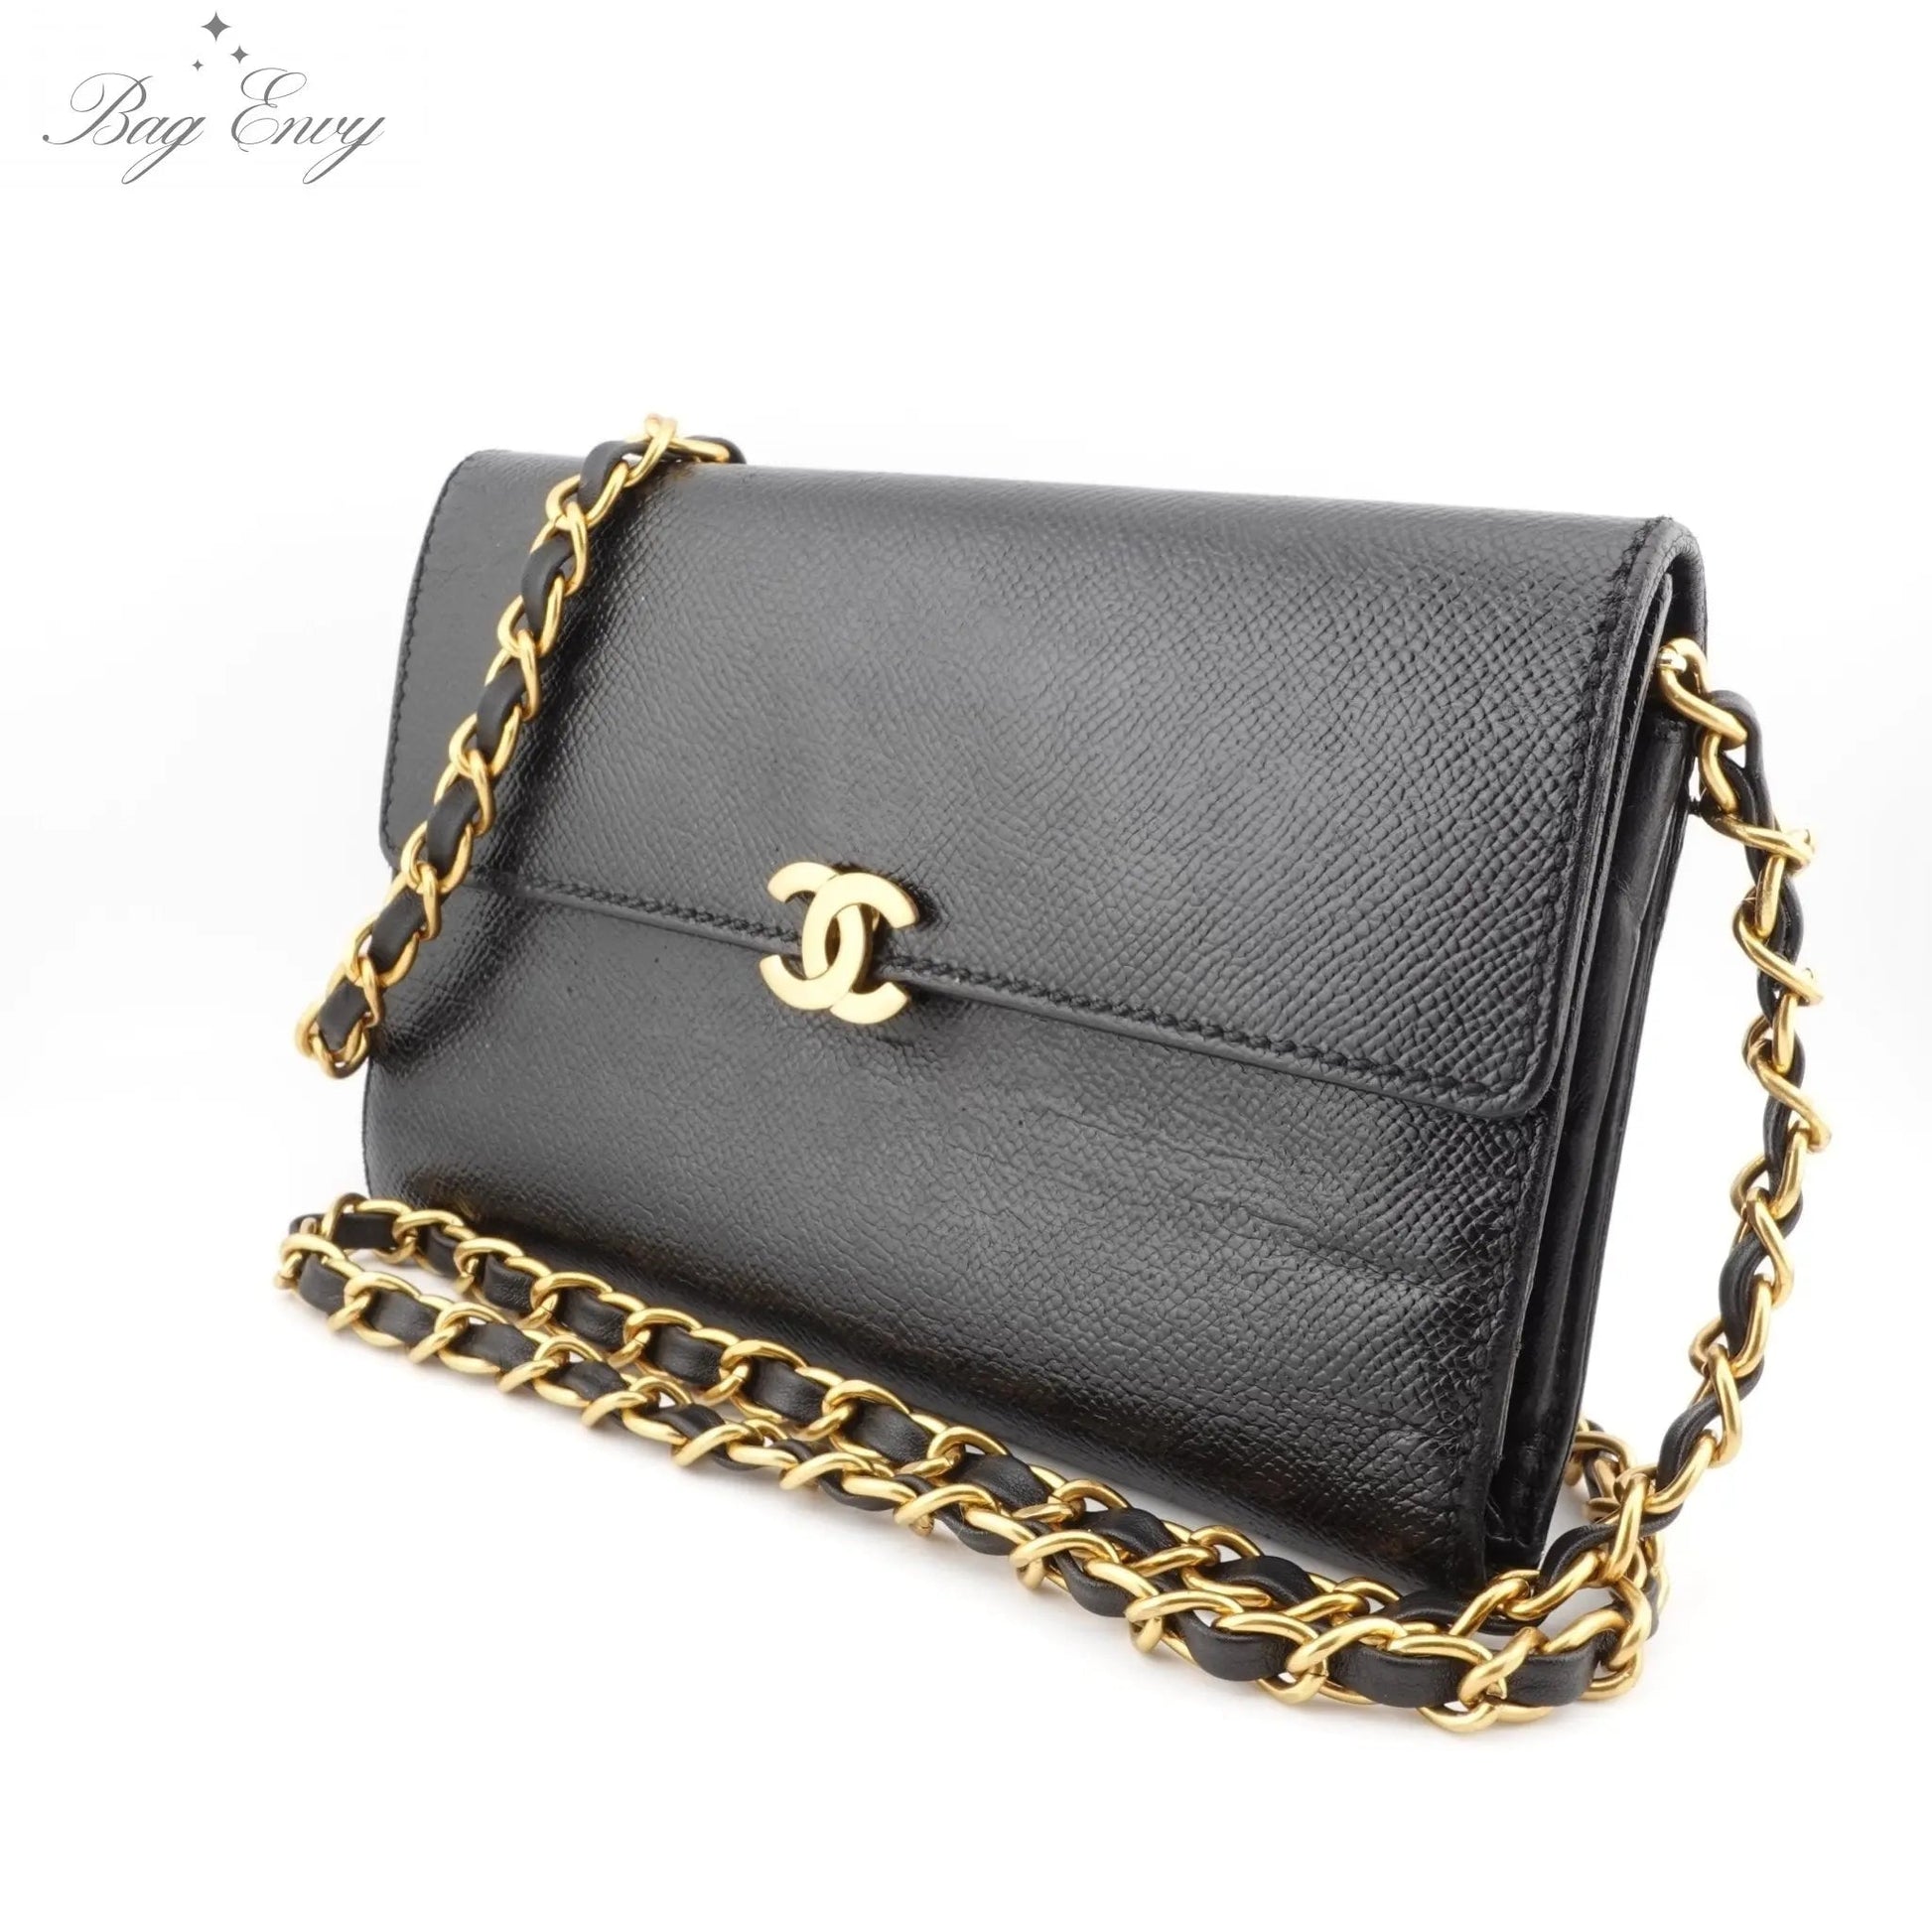 CHANEL Caviar CC Flip Wallet on Chain - Bag Envy